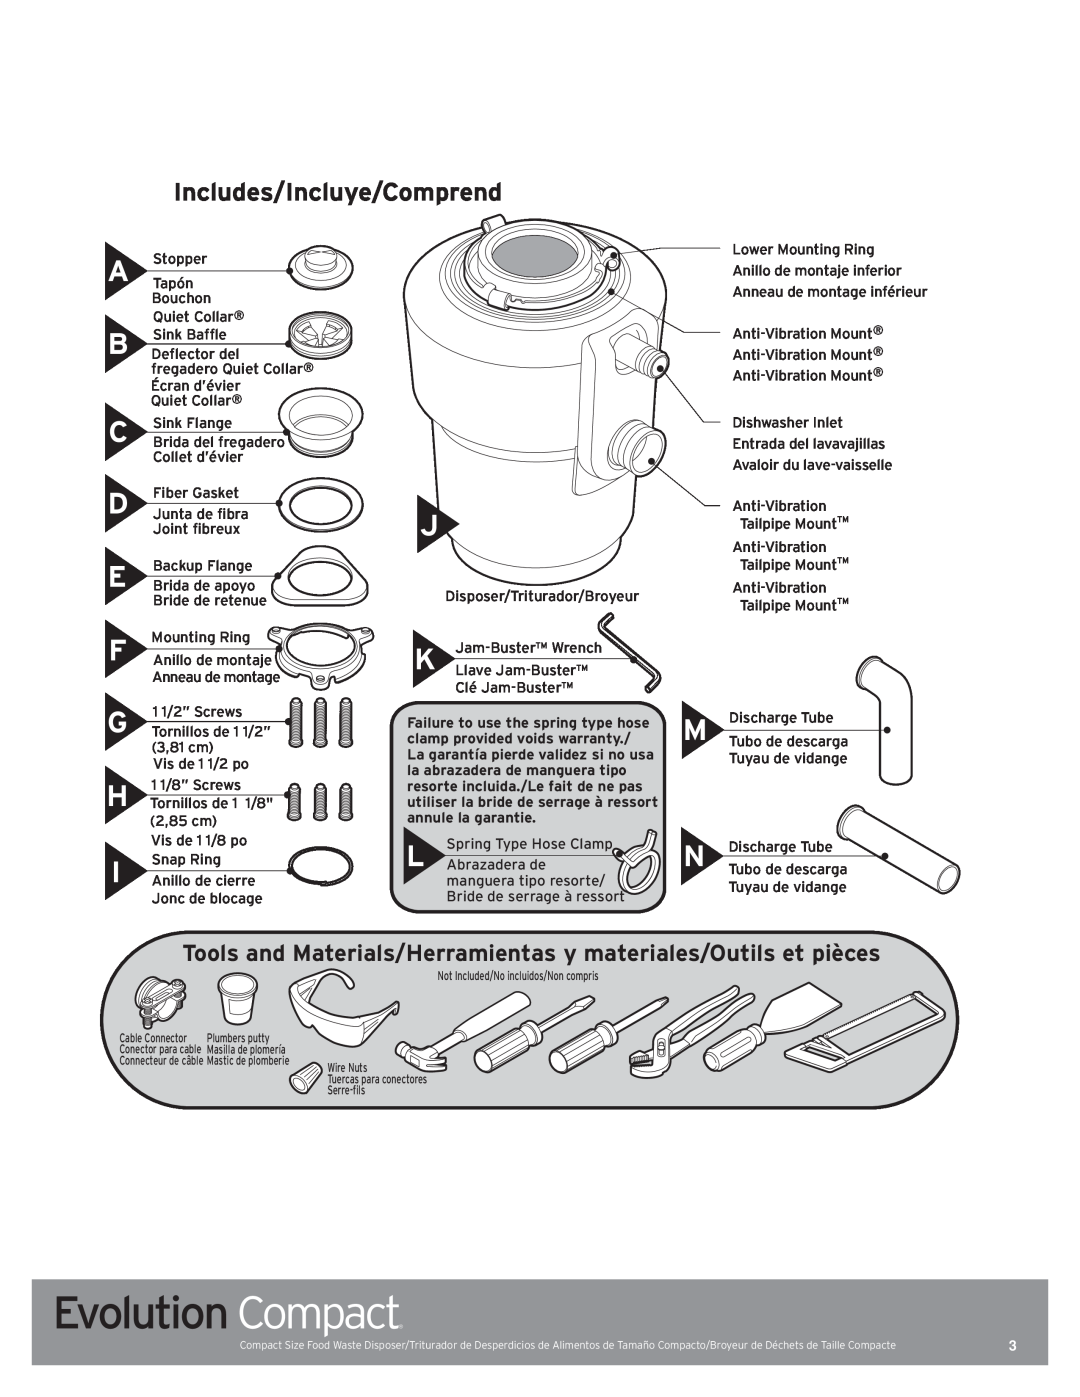 InSinkErator Evolution Compact manual 